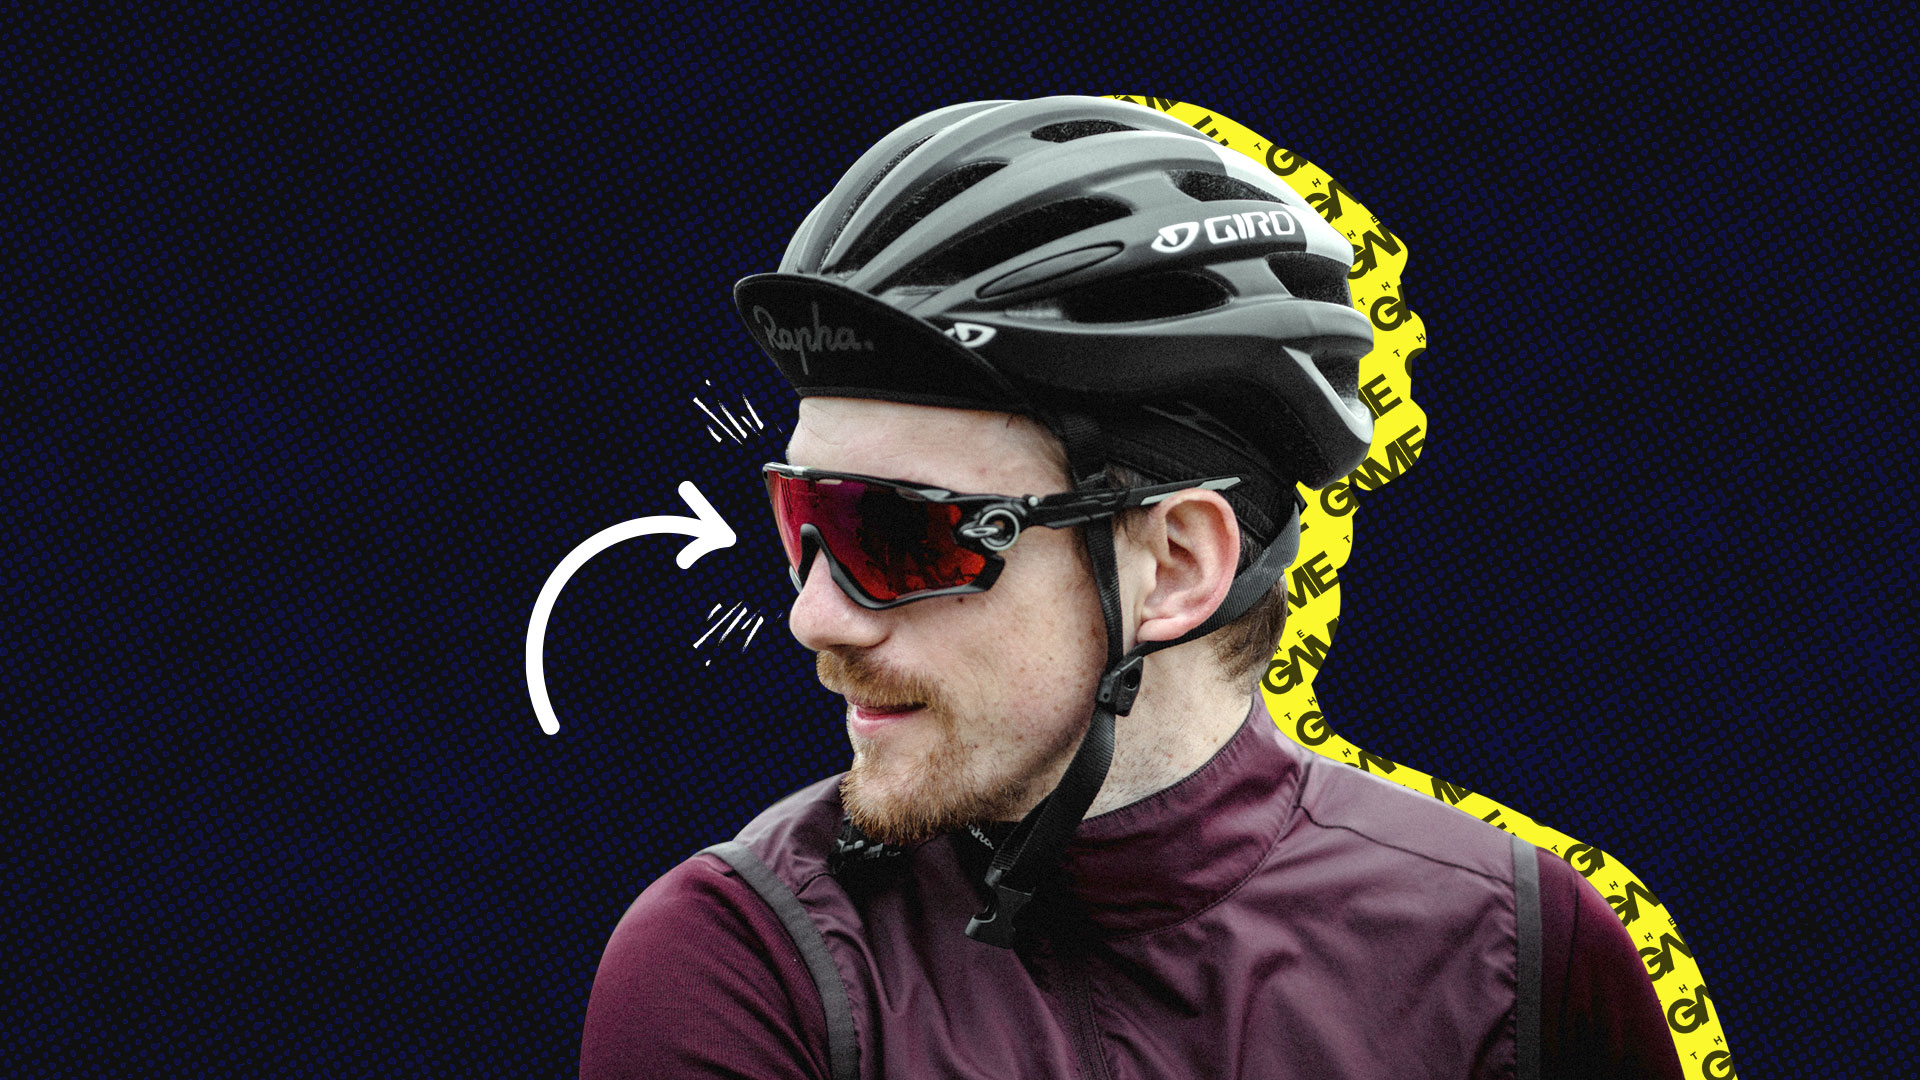 Cycling shades or sunglasses